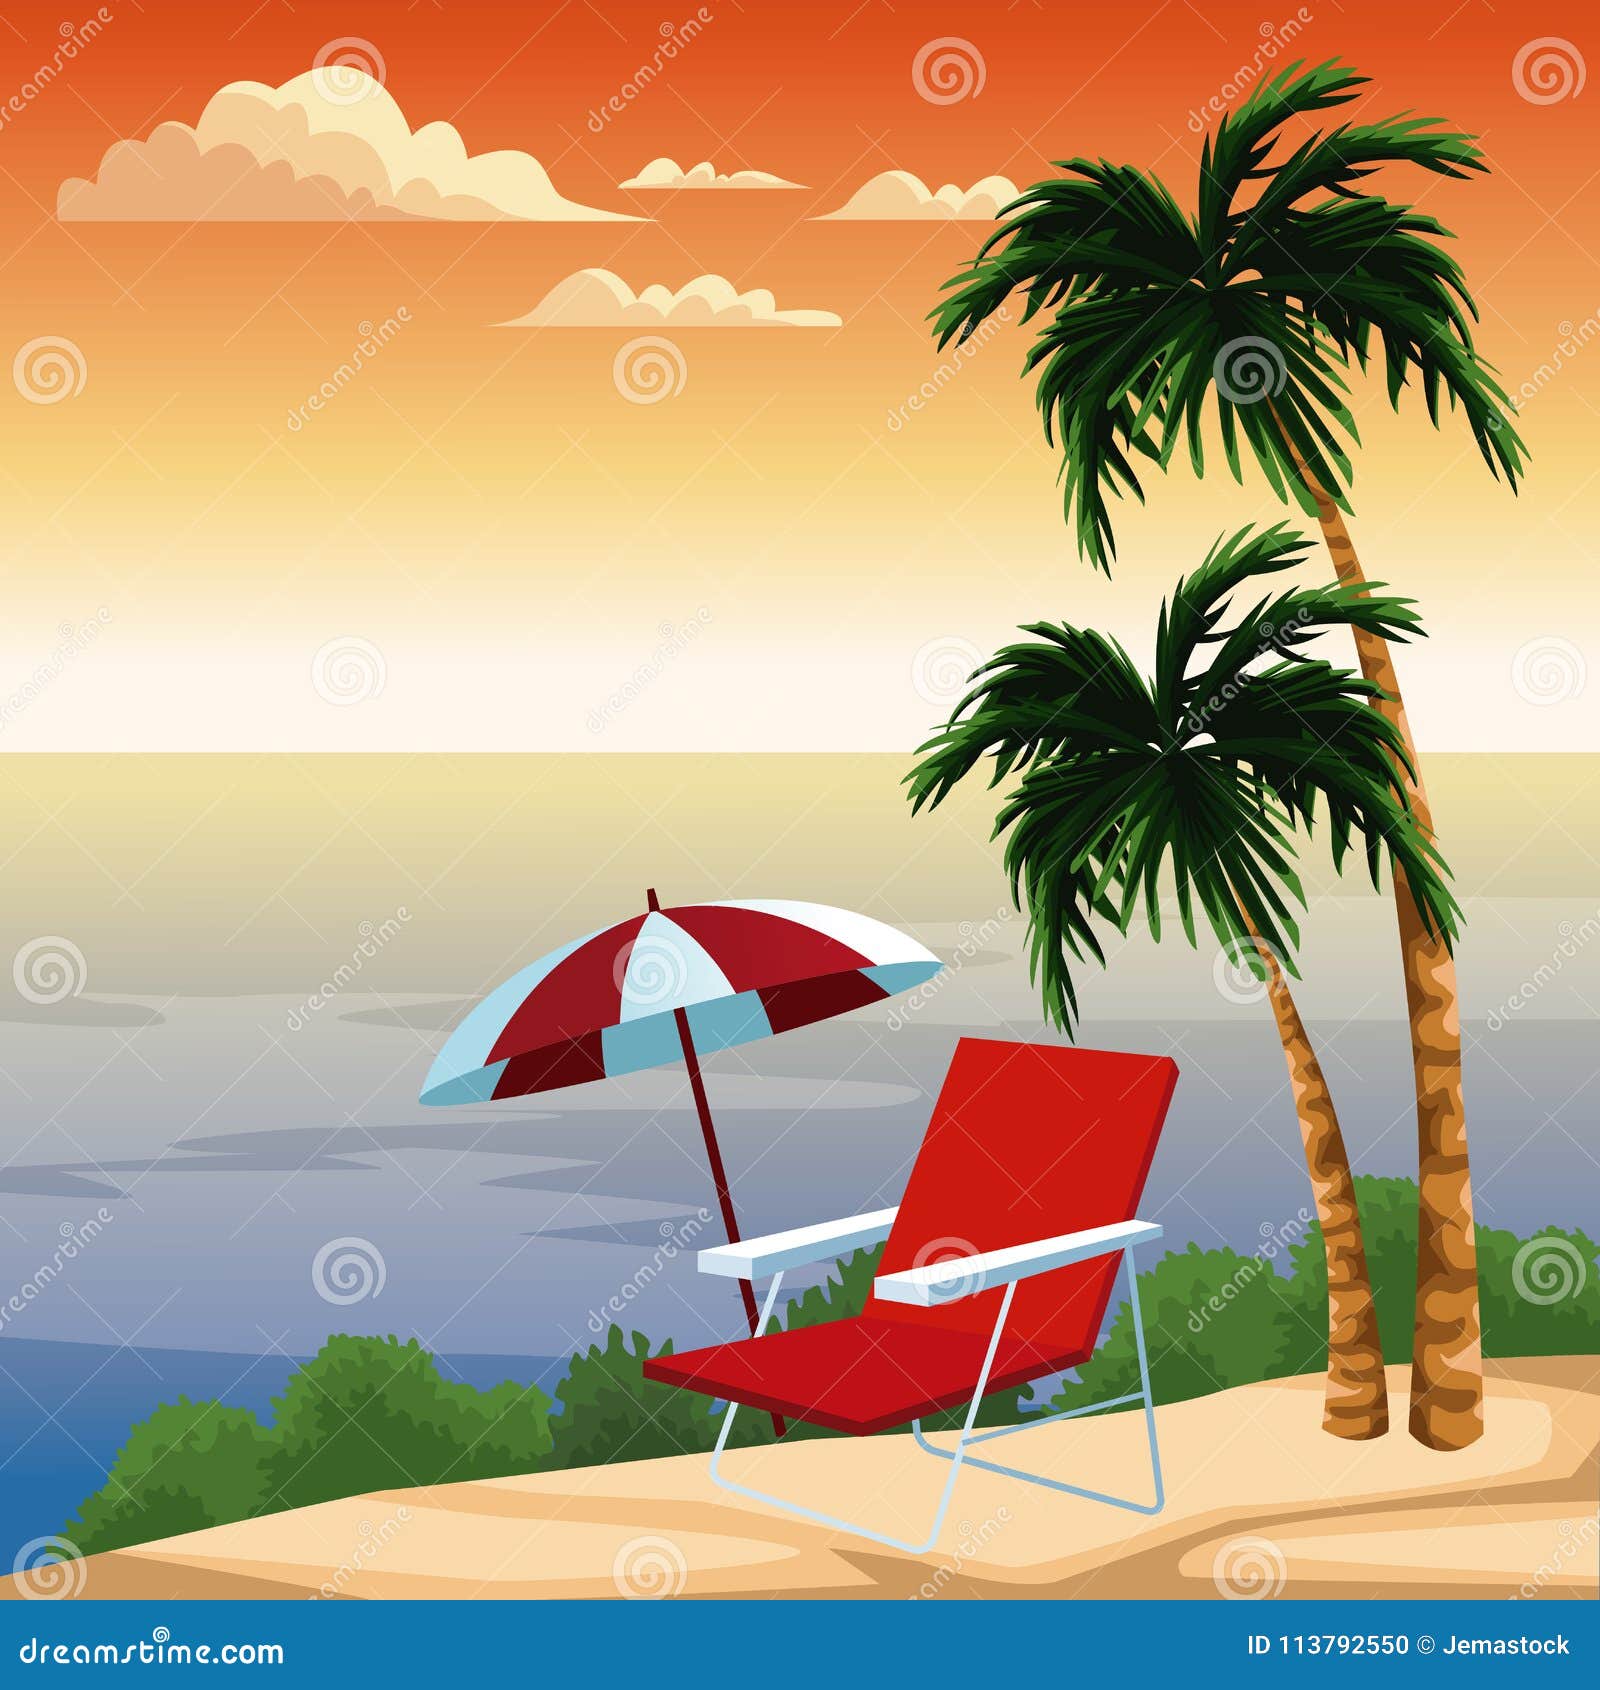 Beautiful island cartoon stock vector. Illustration of summer - 113792550